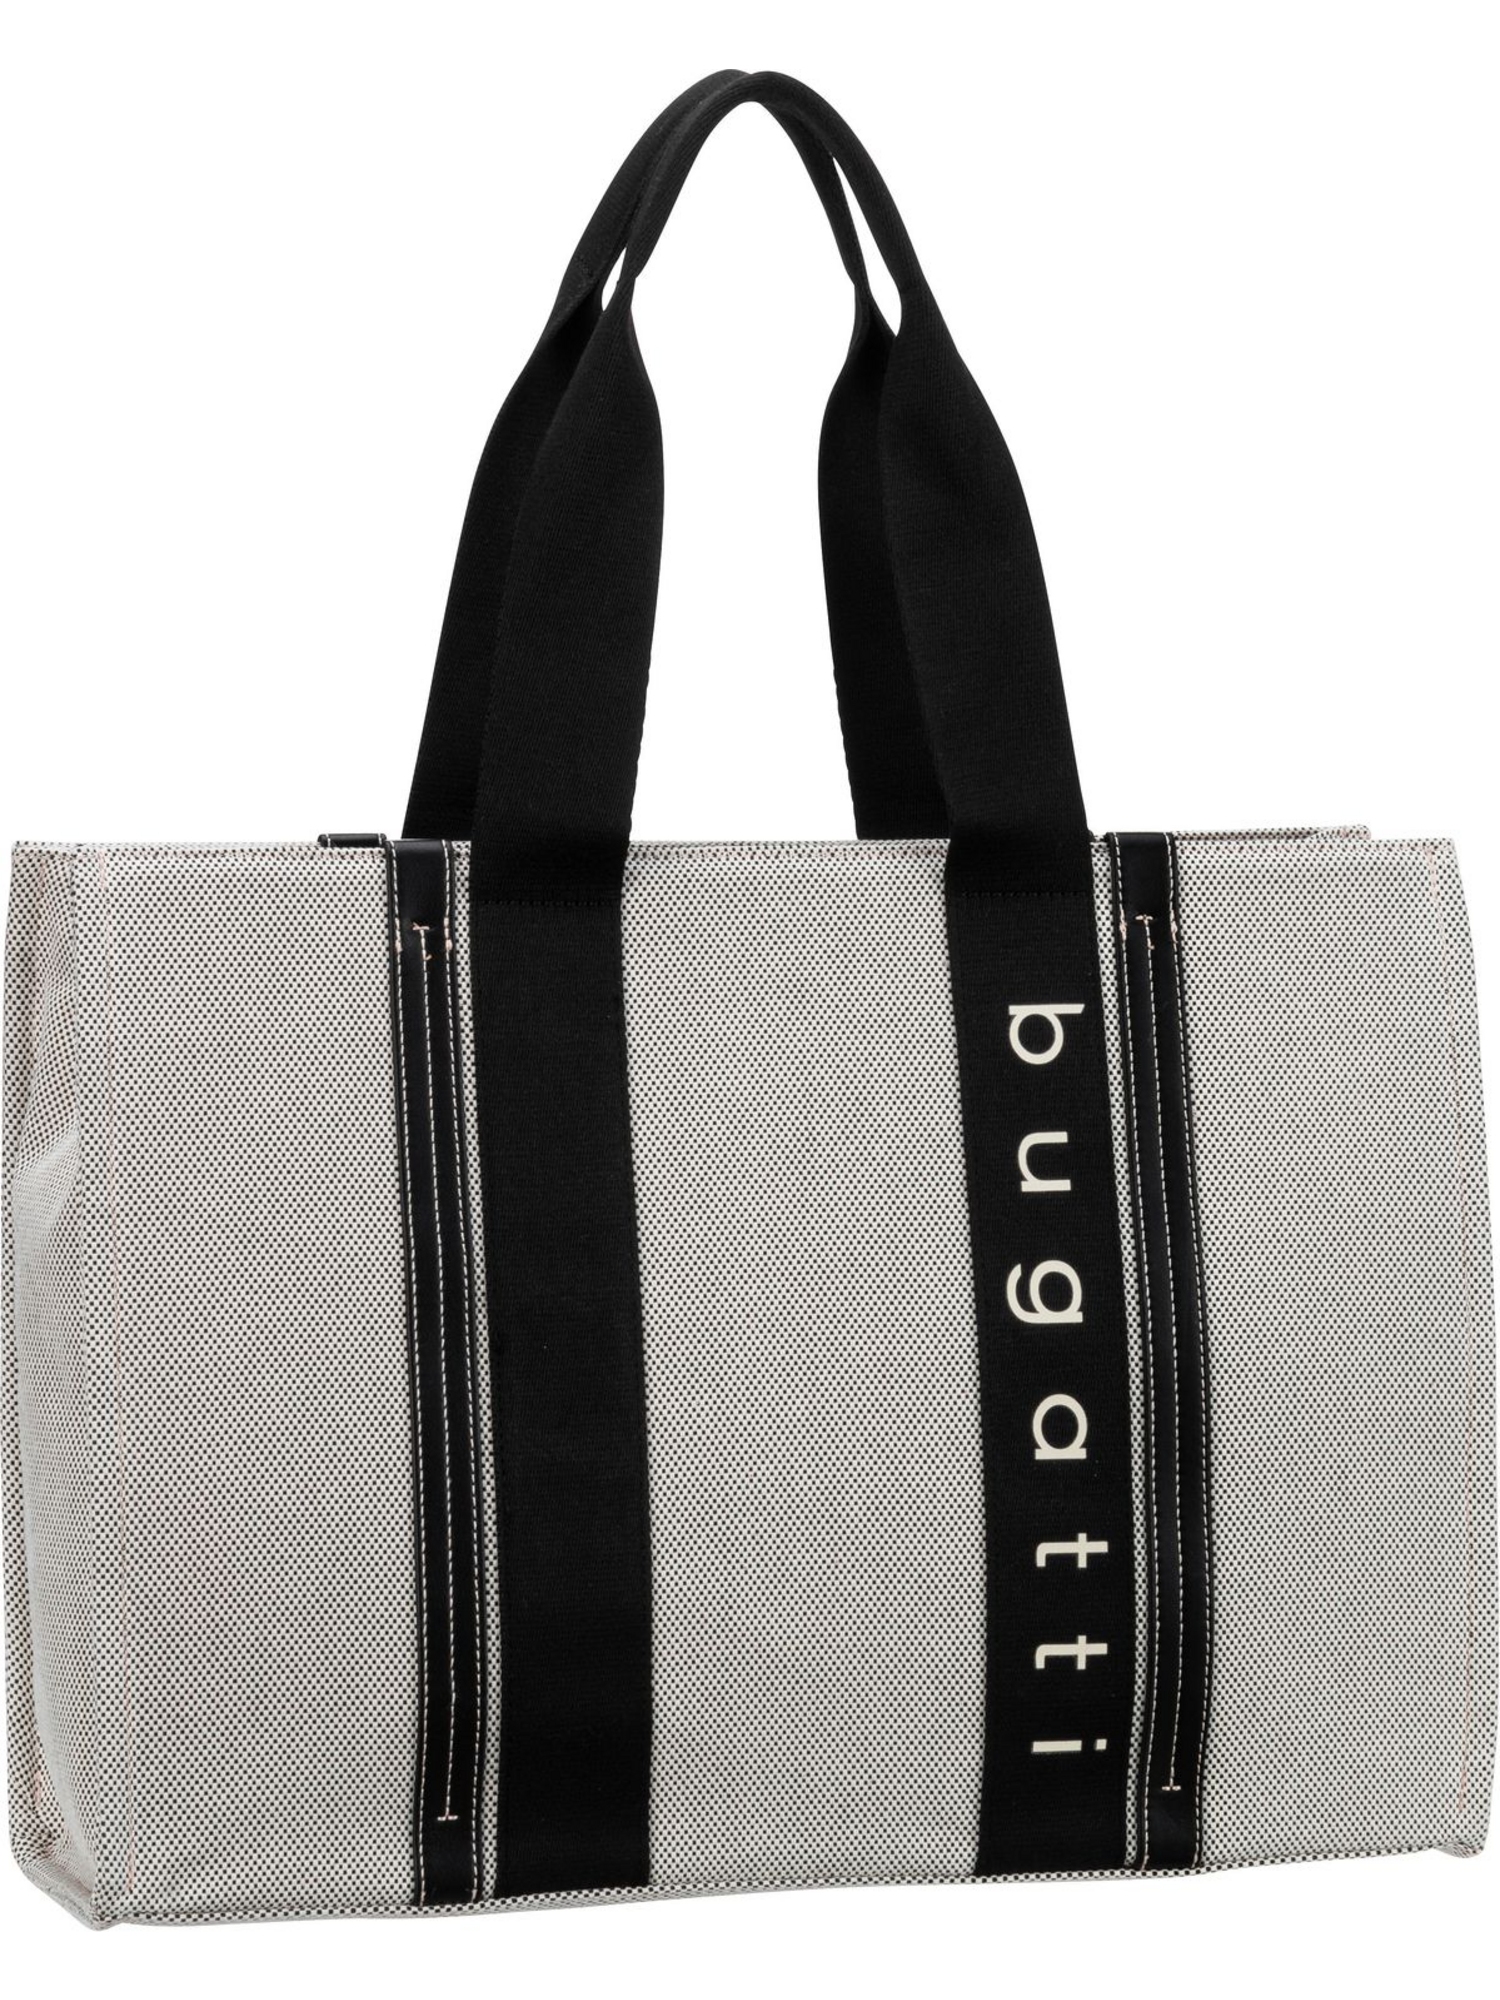 Сумка шоппер Bugatti Ambra Tote Bag Large, черный